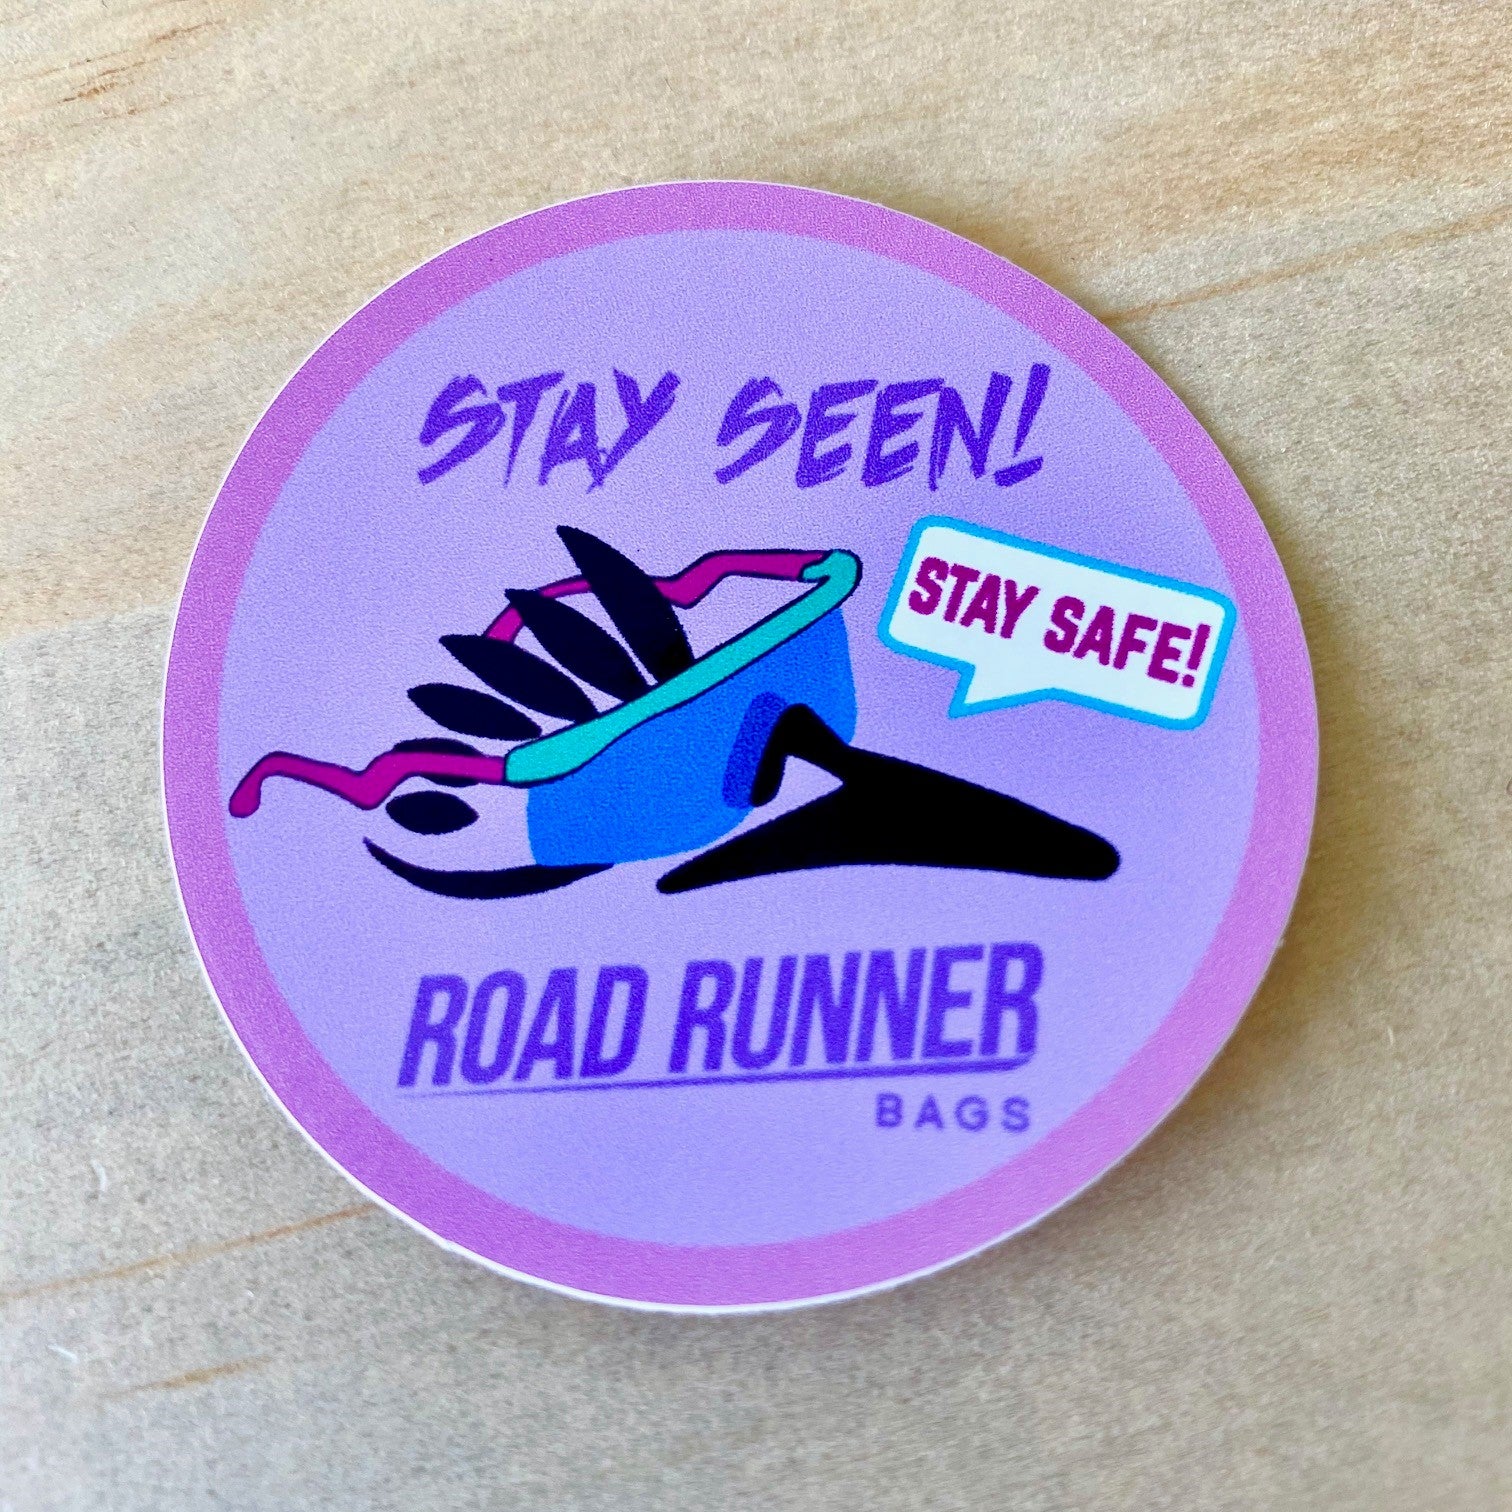 Road Runner sticker